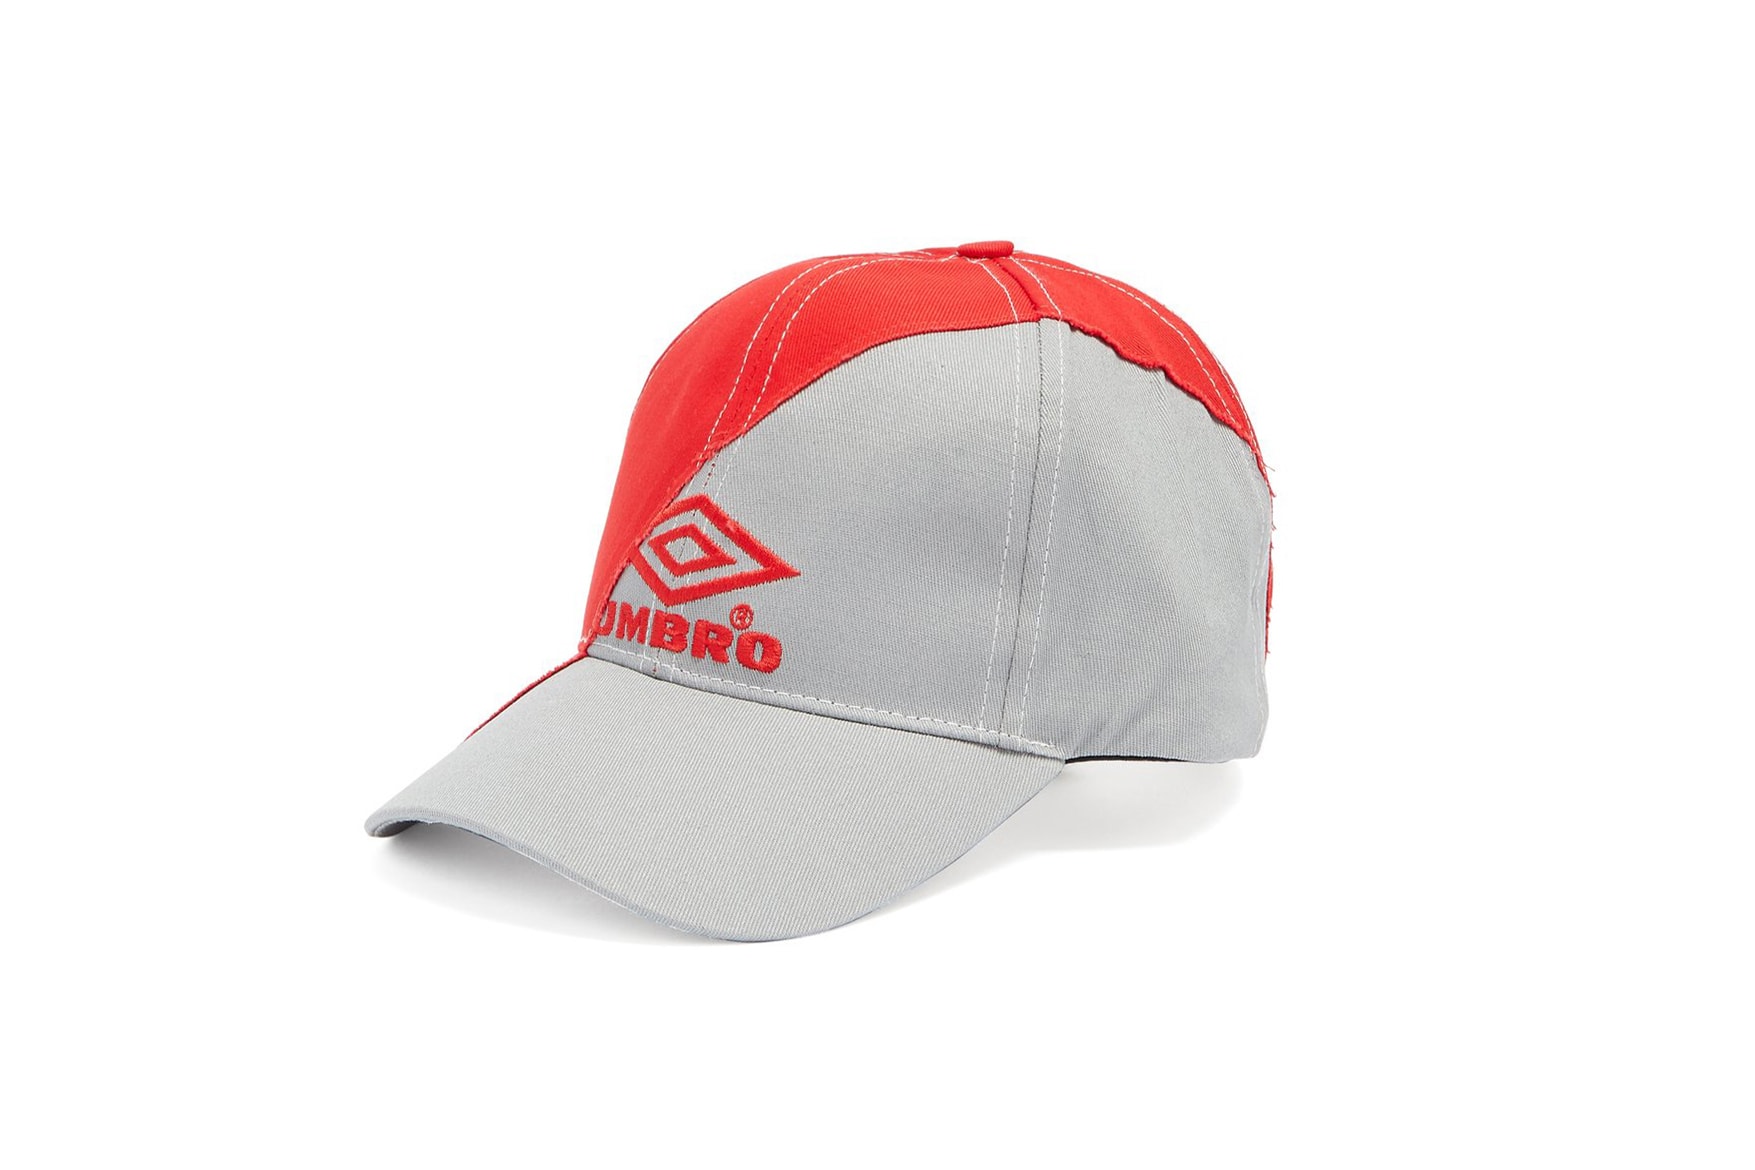 Vetements & Umbro Red and Grey Baseball Cap Demna Gvasalia Sportwear